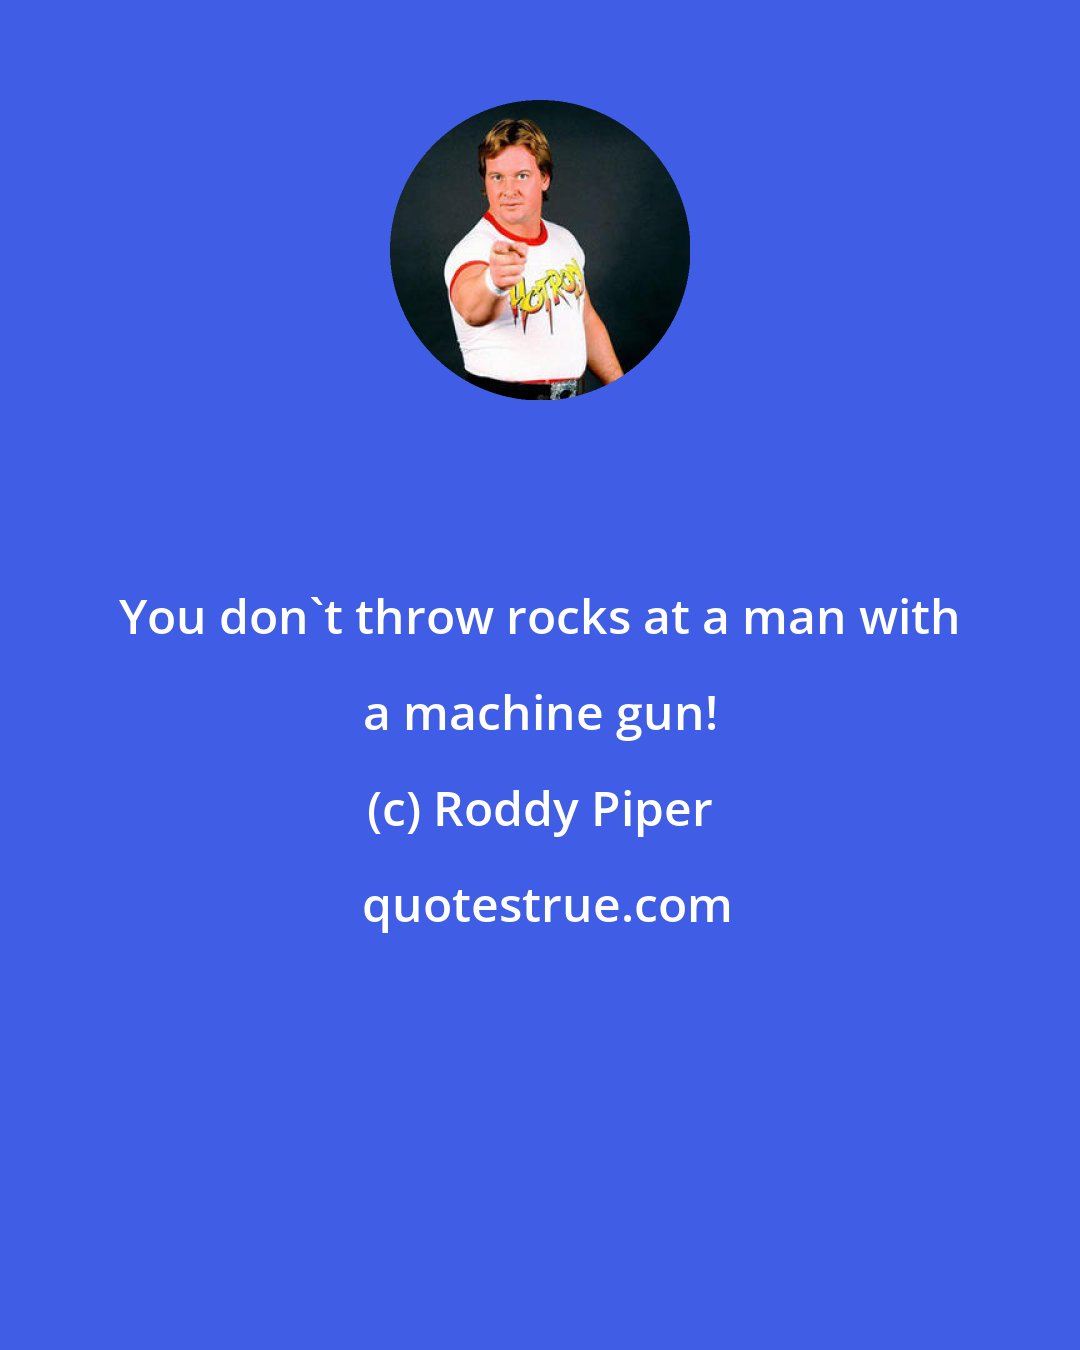 Roddy Piper: You don't throw rocks at a man with a machine gun!